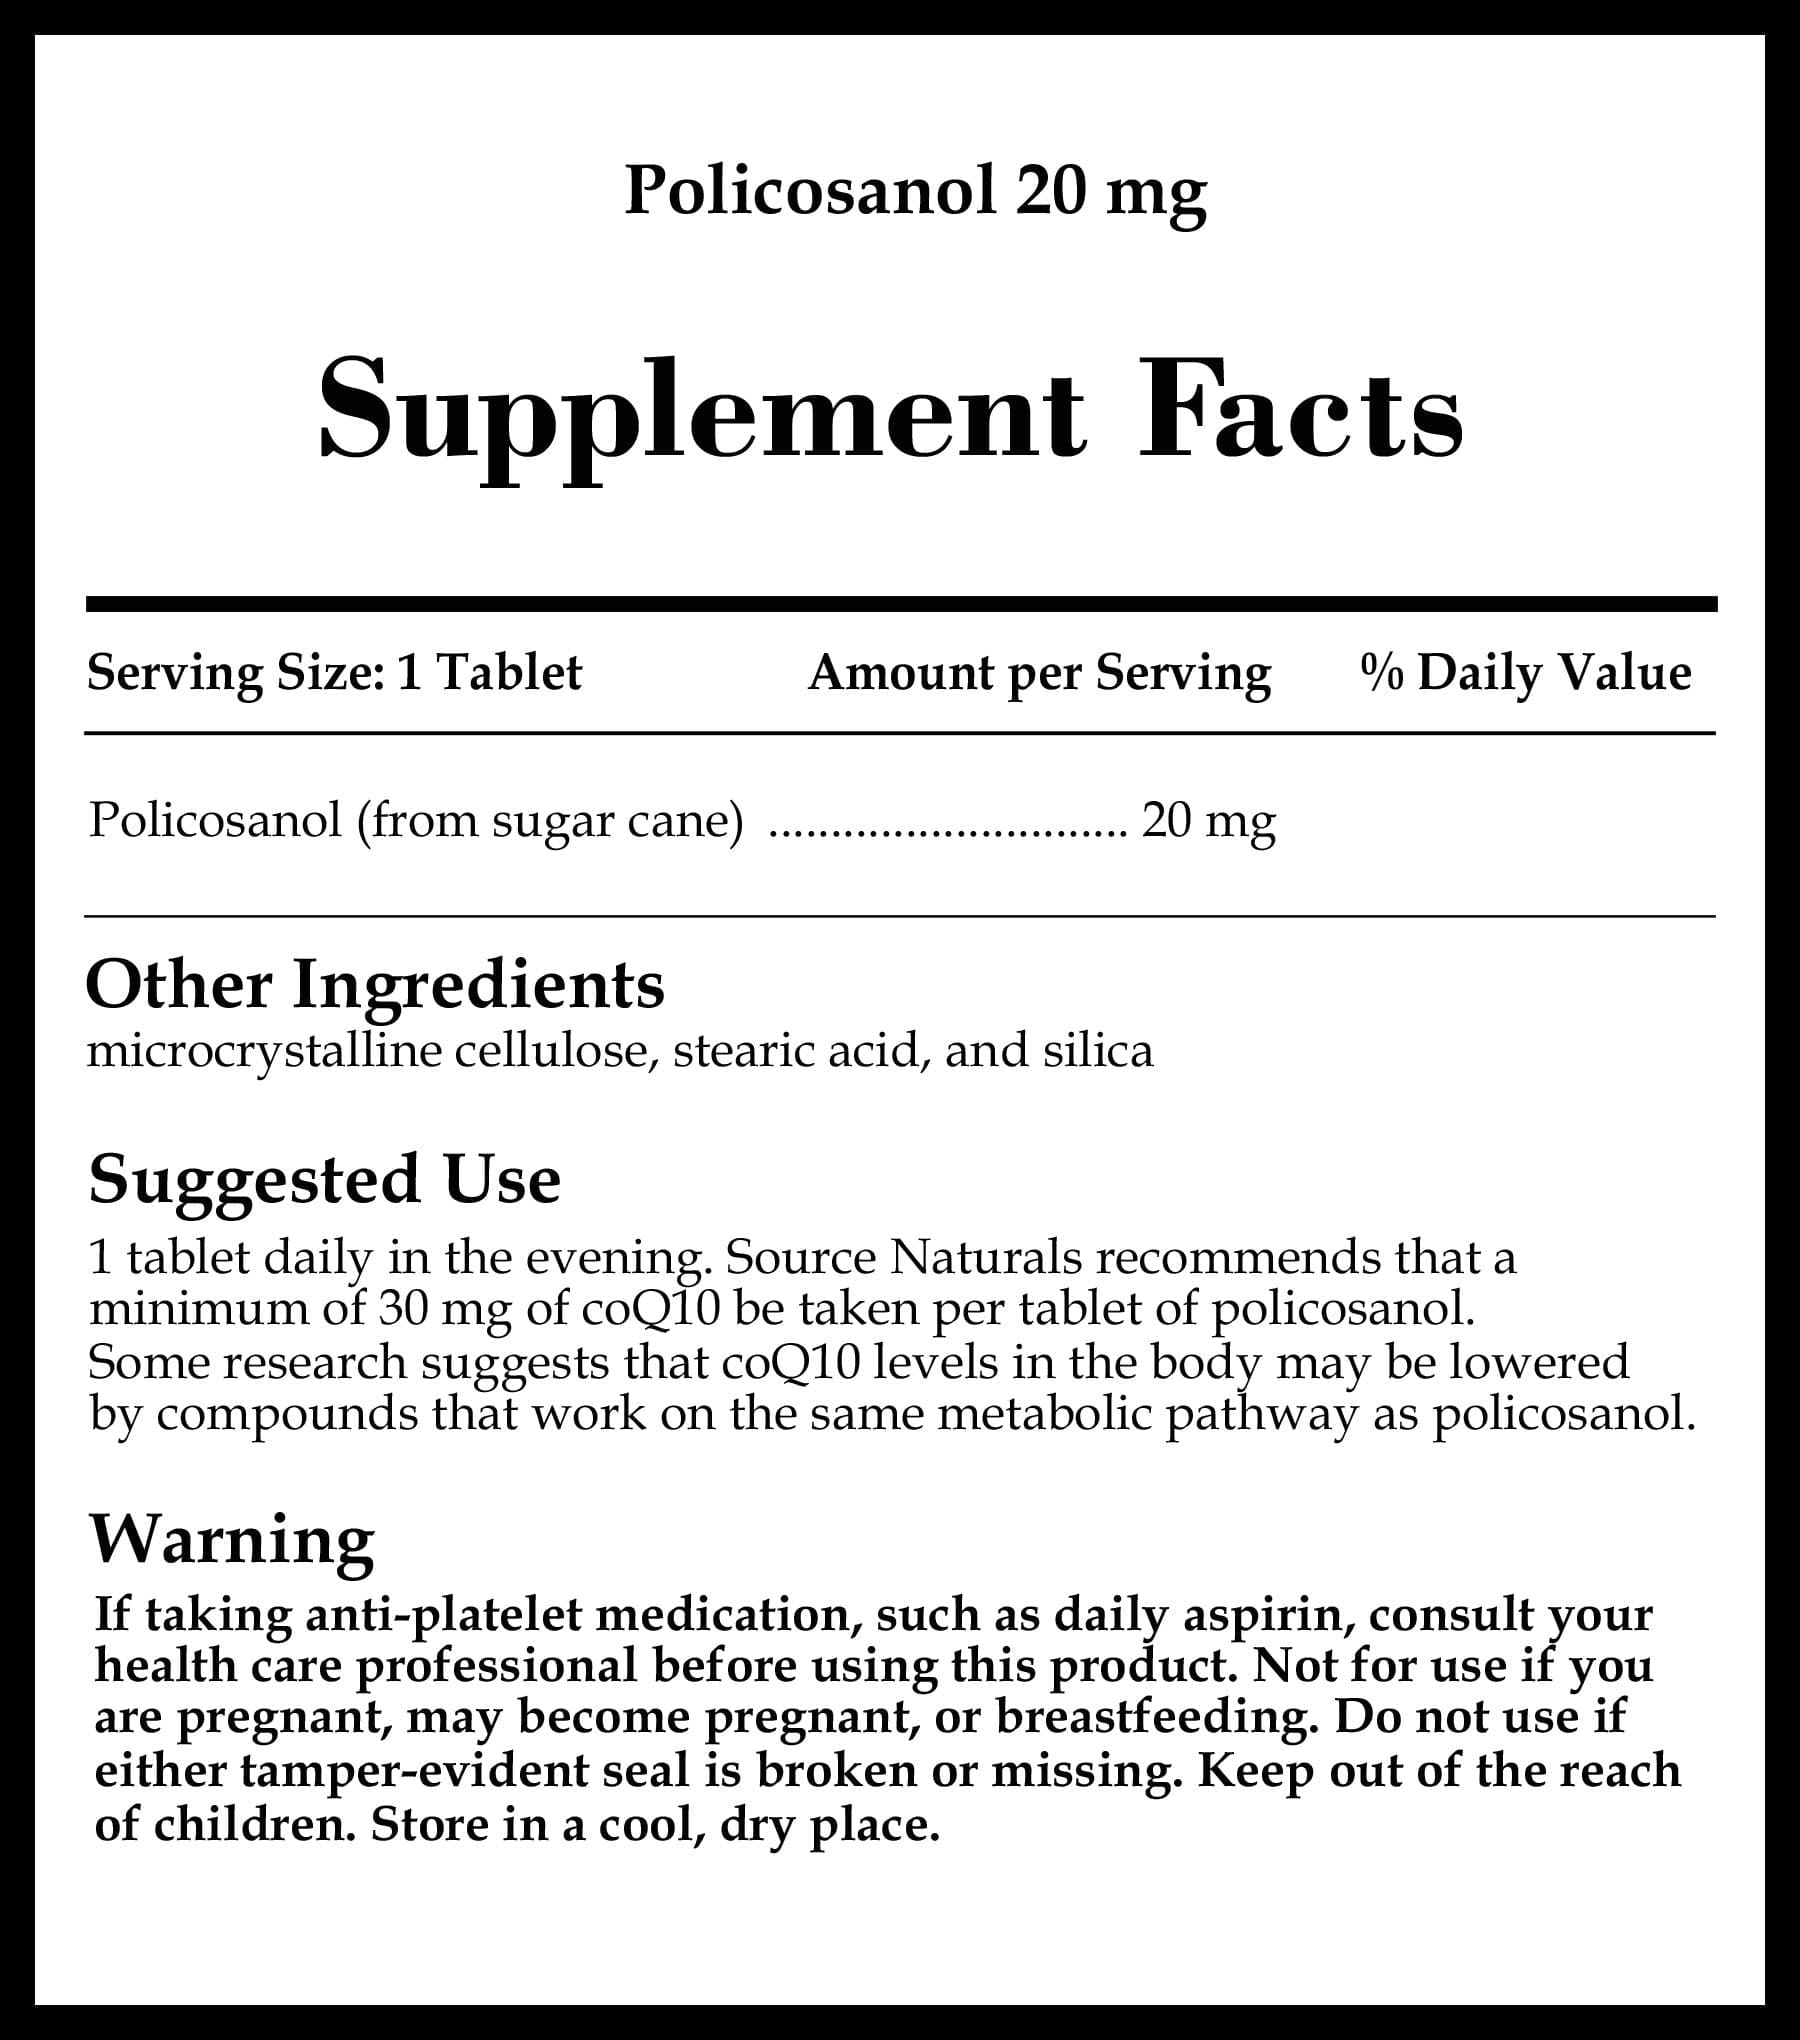 Source Naturals Policosanol 20 mg Ingredients